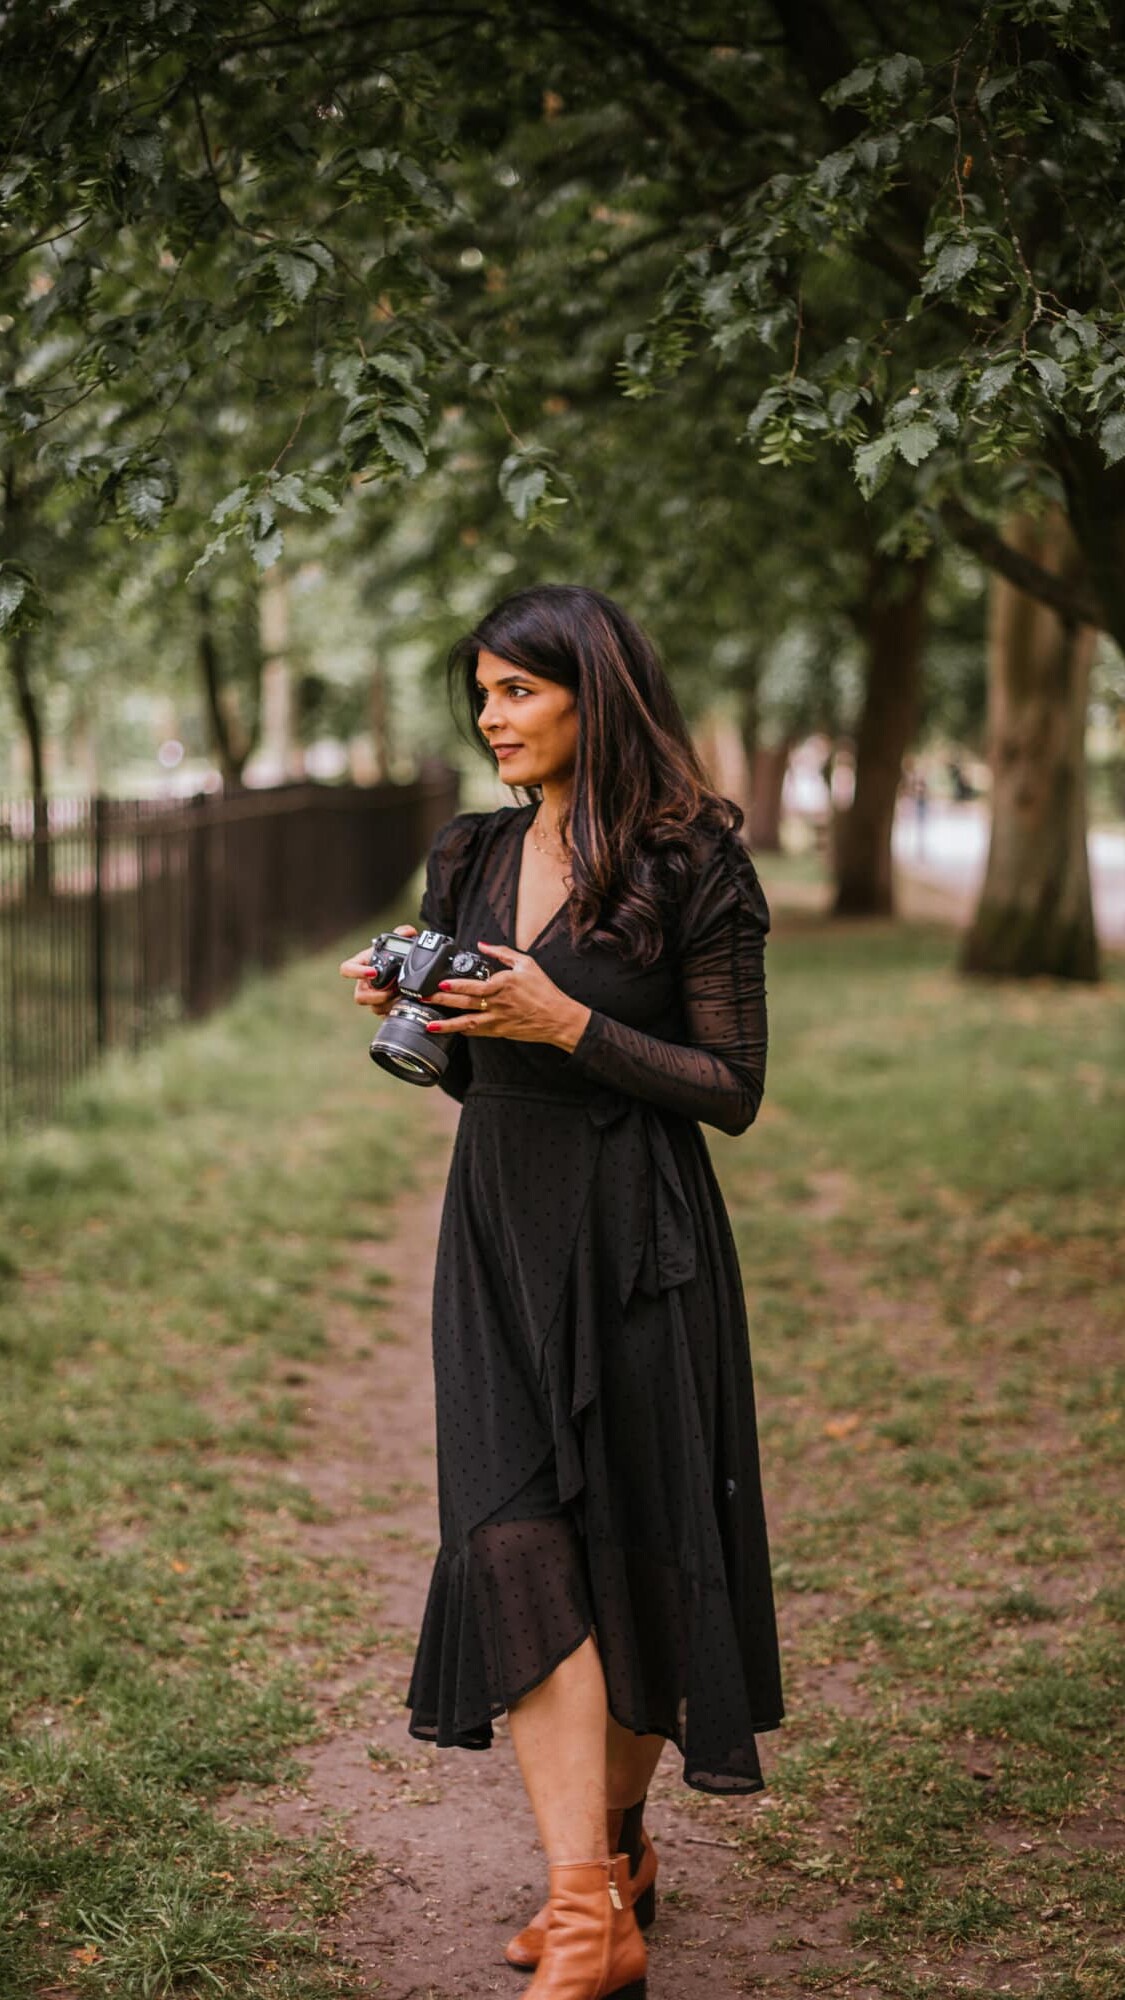 London wedding photographer Headshot in a park wearing blakc dress and holding a Nikon camera